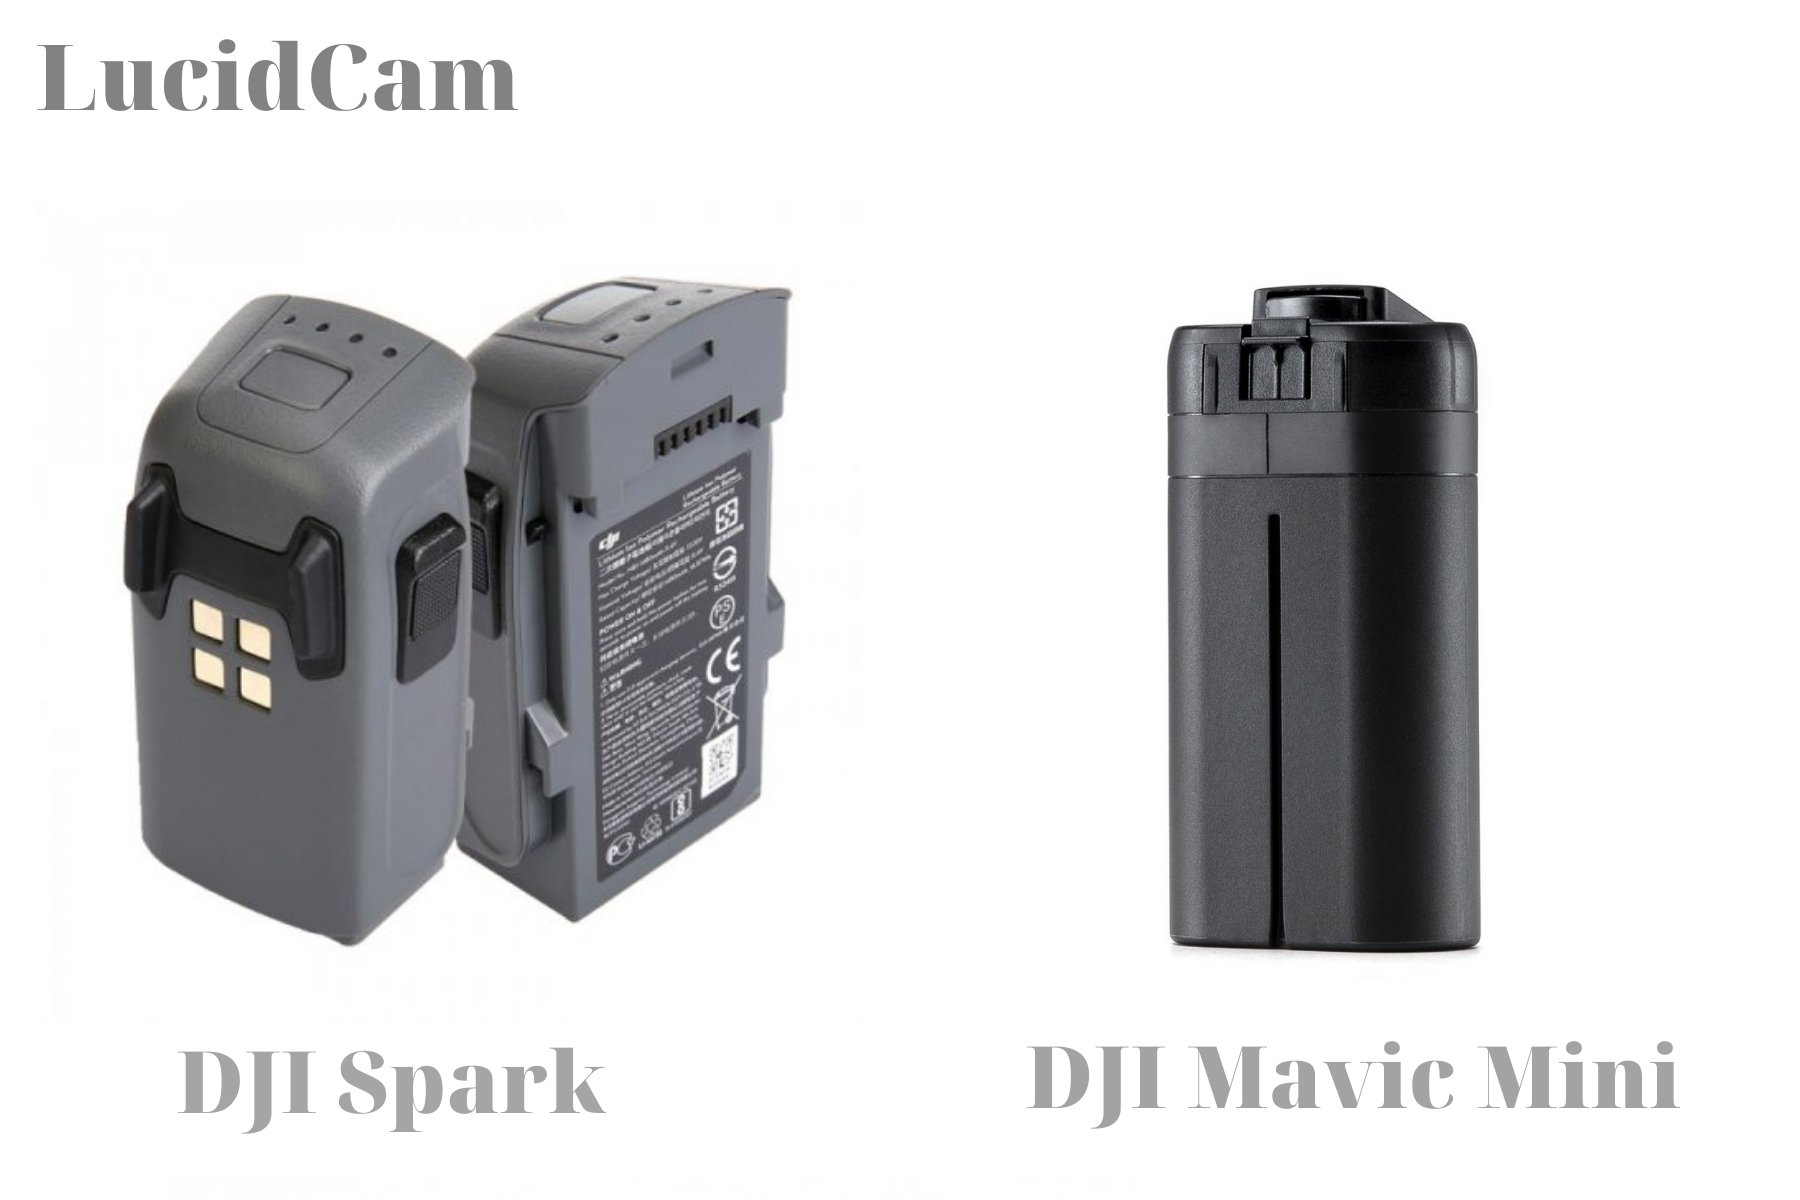 DJI Spark vs DJI Mavic Mini Drone - Battery life